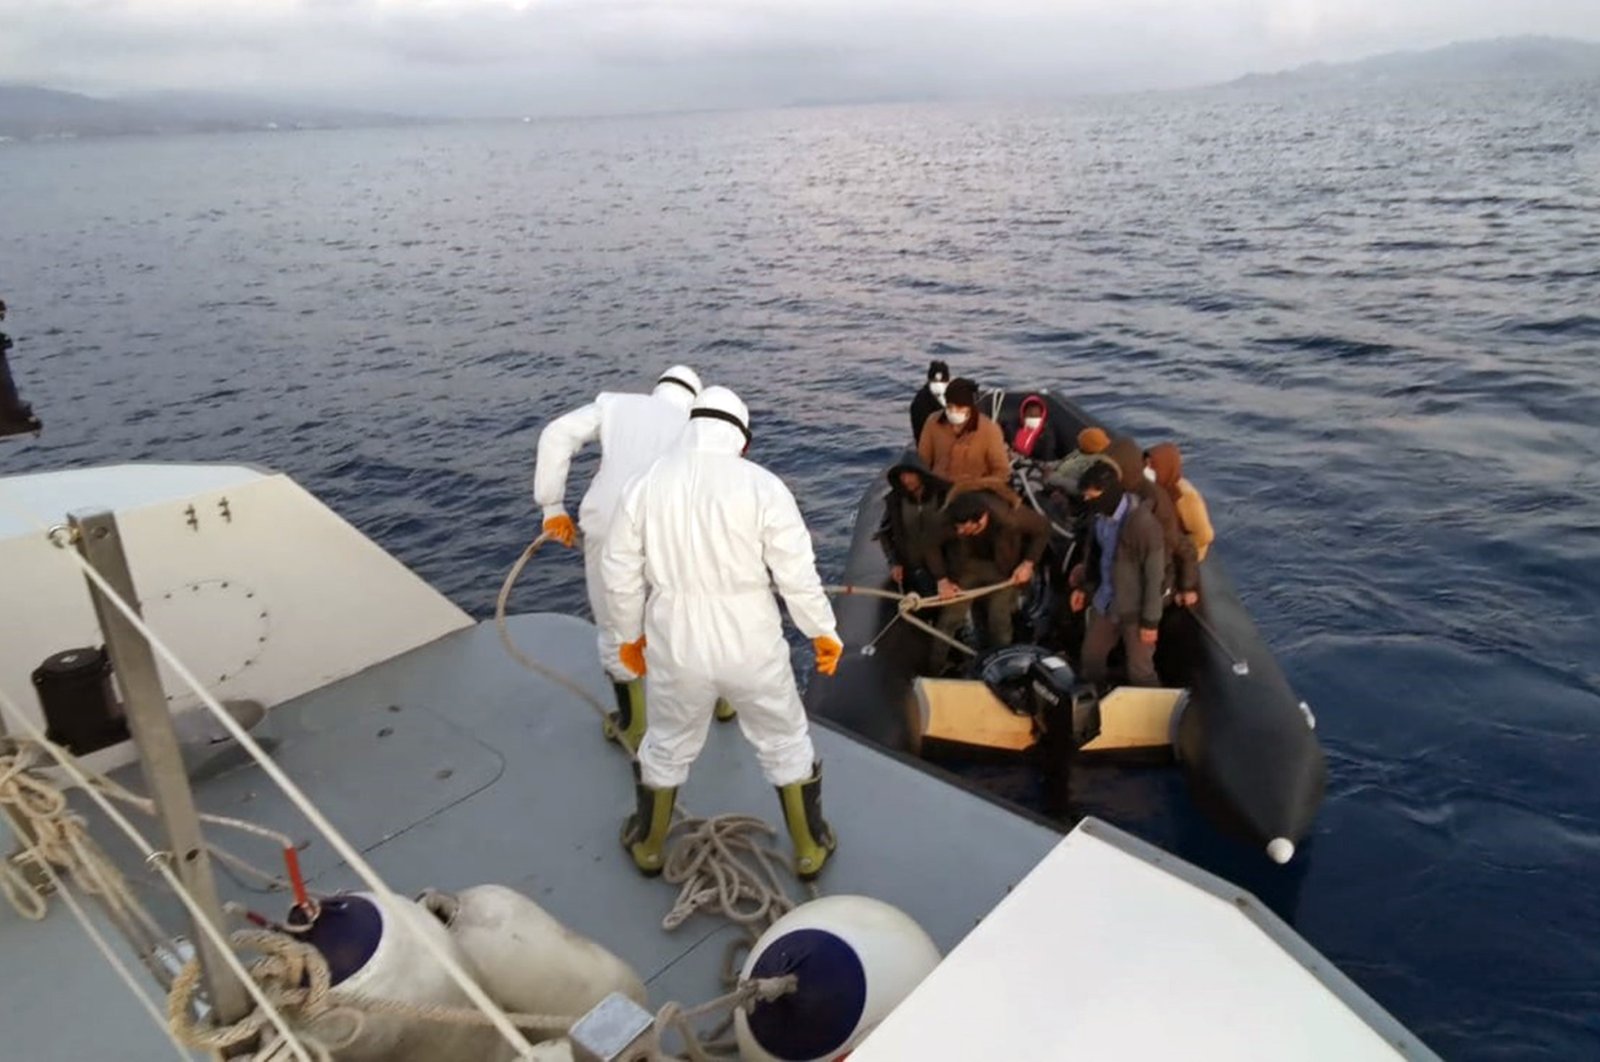 Turkish Coast Guard units help migrants pushed back by Greek counterparts near Muğla province in the Aegean Sea on Thursday, April 9, 2020 (IHA Photo)